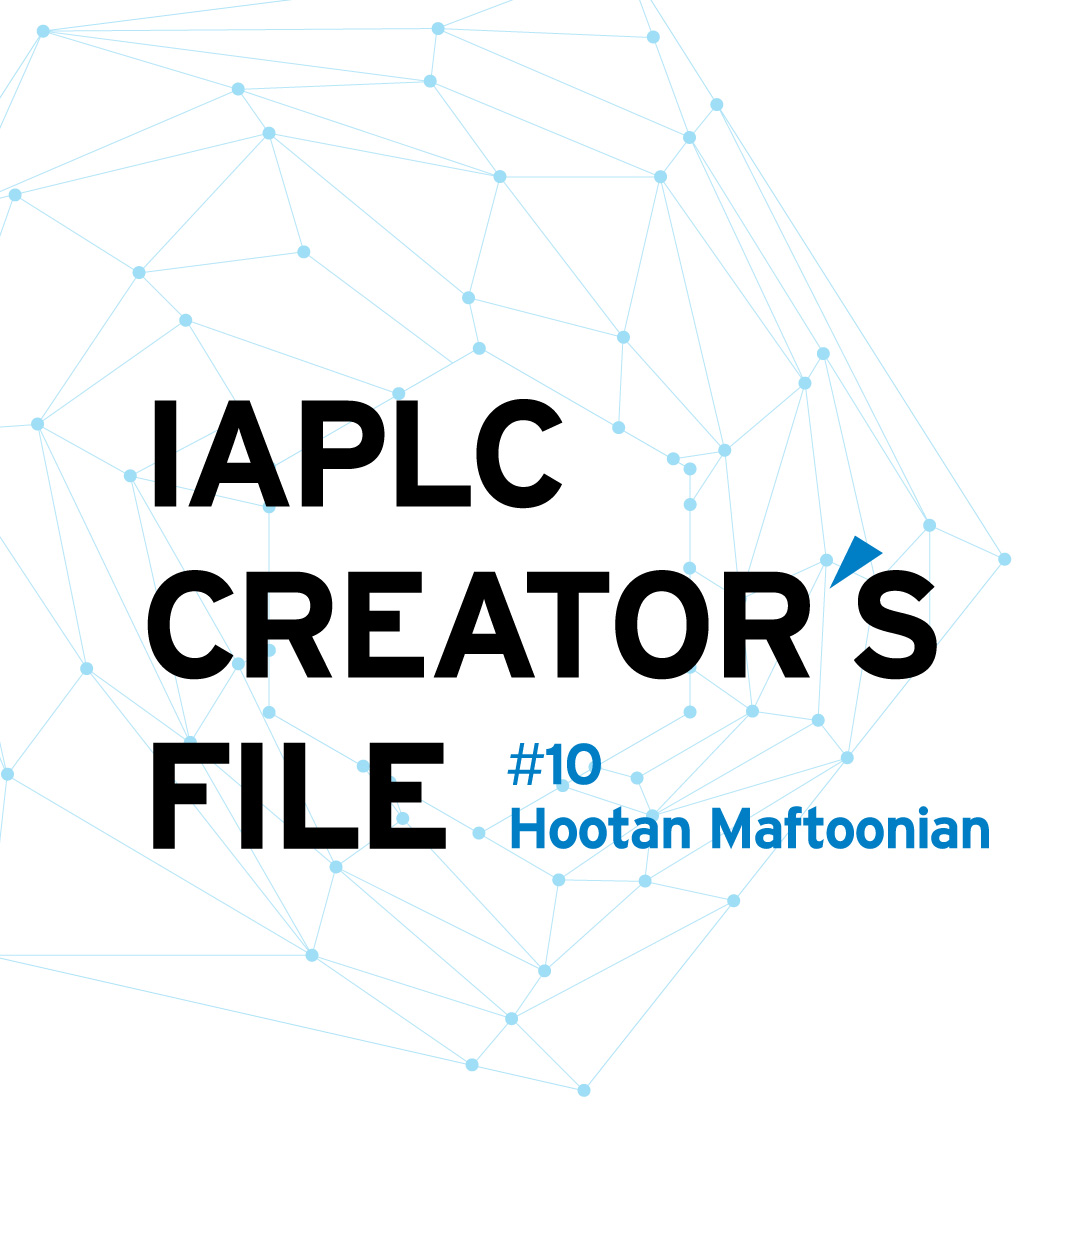 IAPLC CREATOR’S FILE #10 Hootan Maftoonian